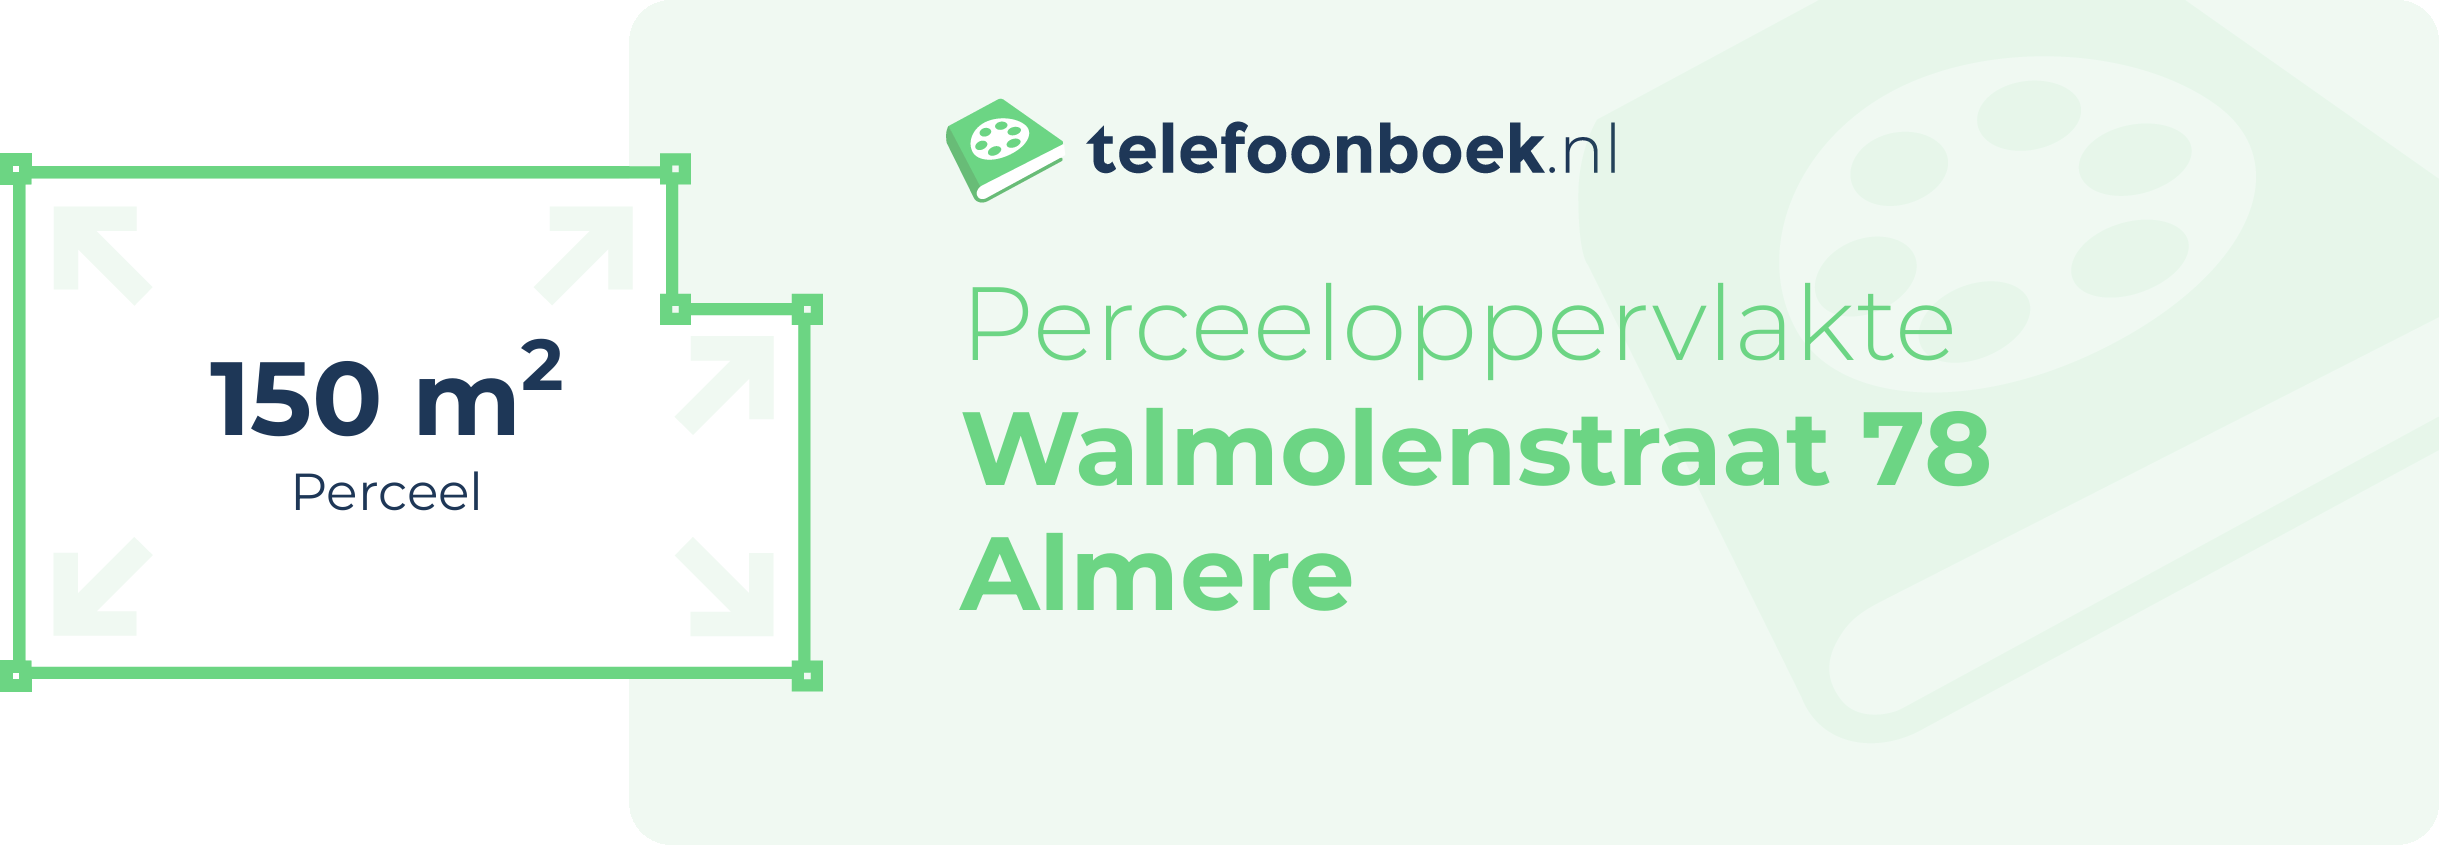 Perceeloppervlakte Walmolenstraat 78 Almere